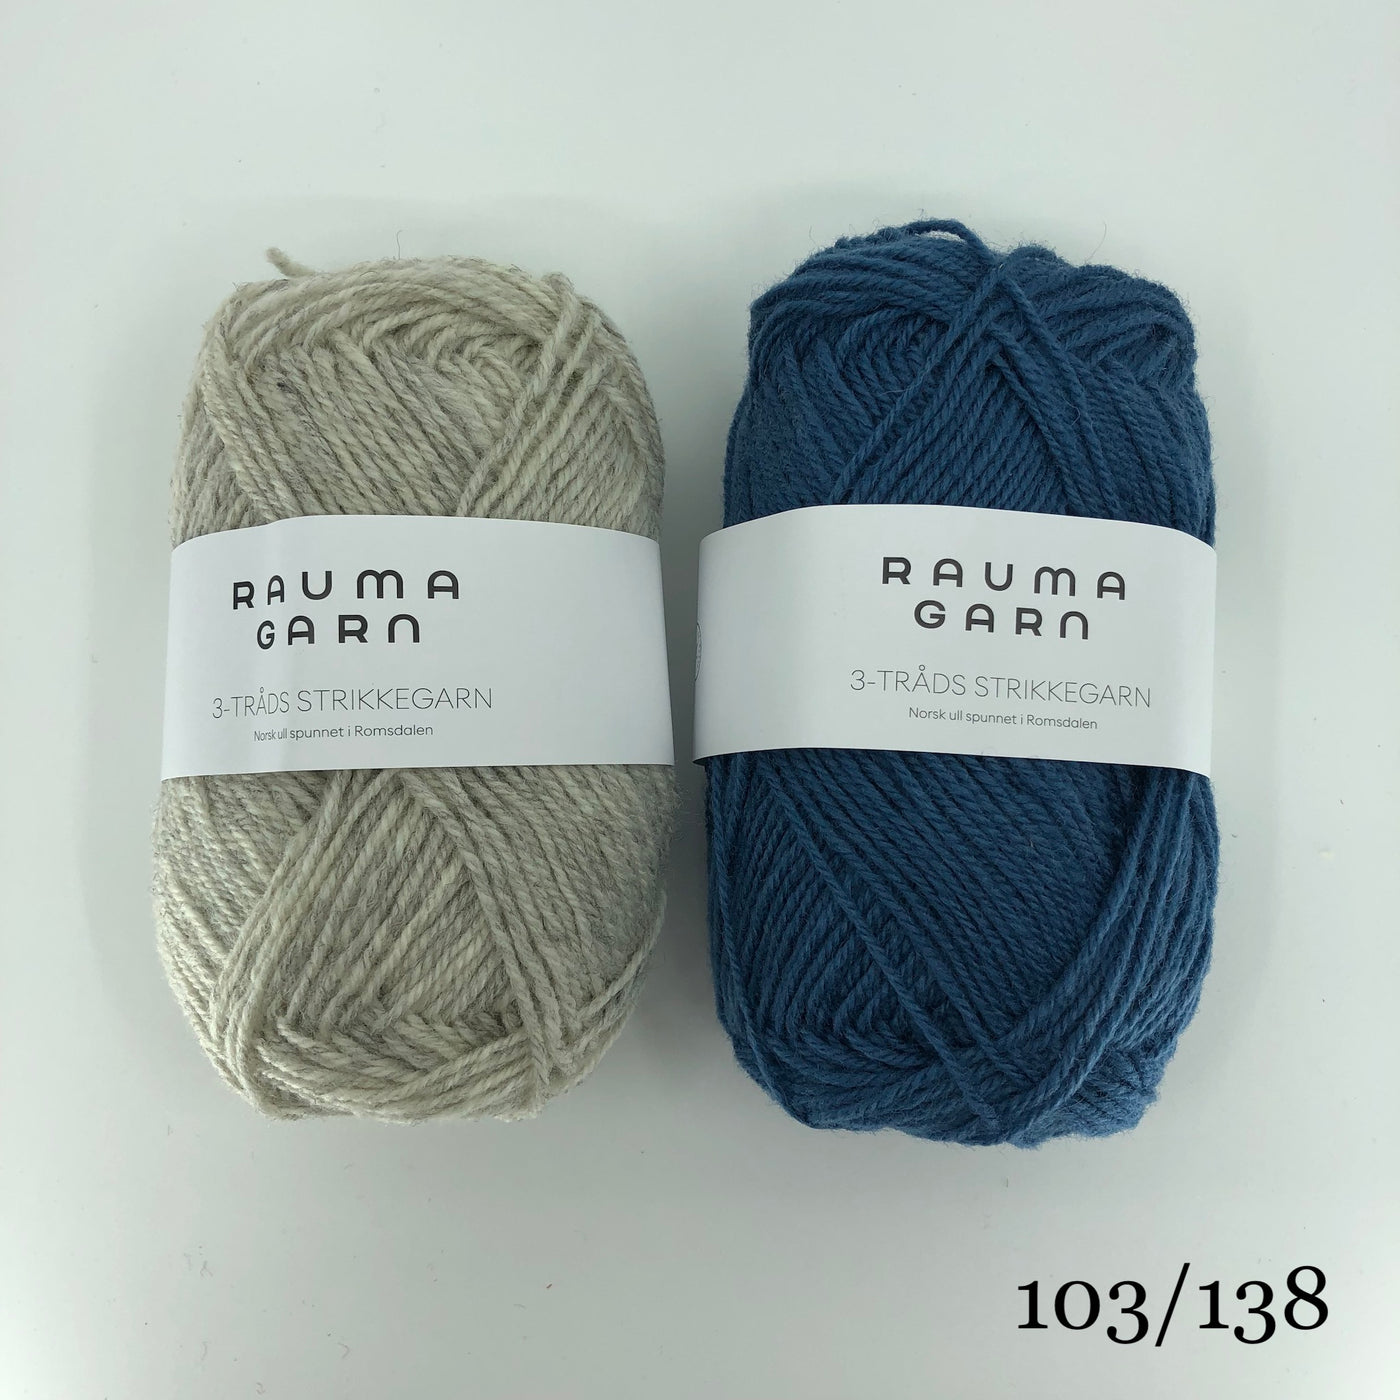 The Woolly Thistle Bladjakke Cardigan 288-1 in Rauma Strikkegarn and 2 balls of yarn in beige and blue.